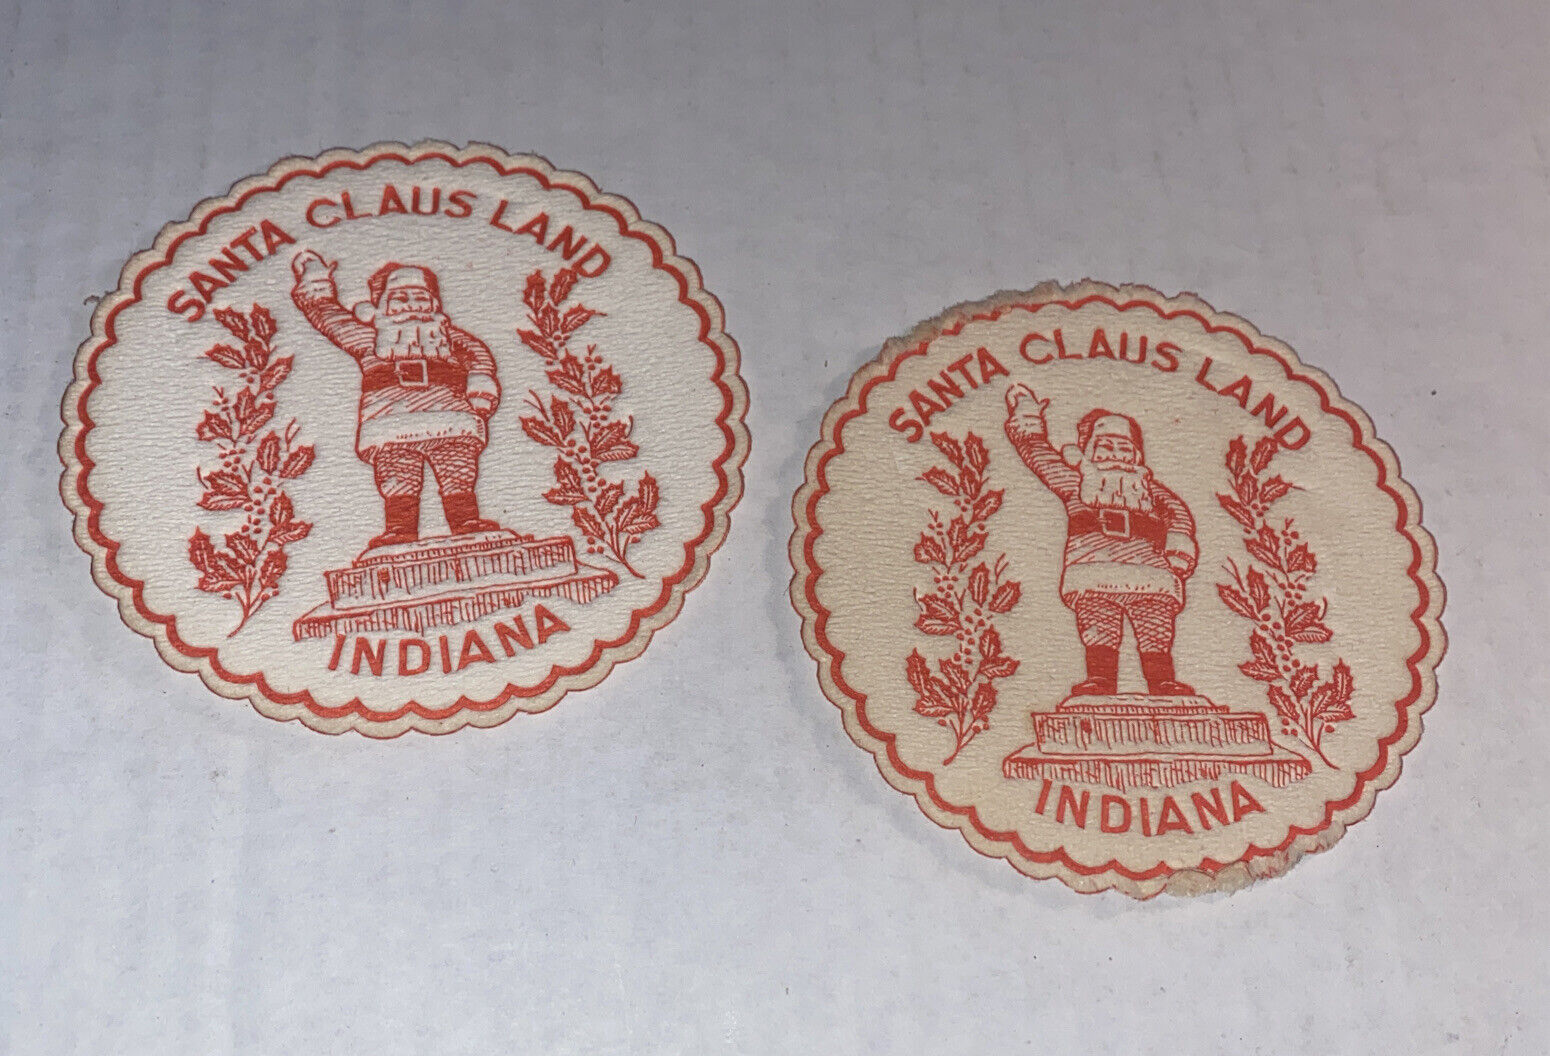 2 Vintage Santa Claus Land Indiana Souvenir Coasters Japan Made Embossed Cloth